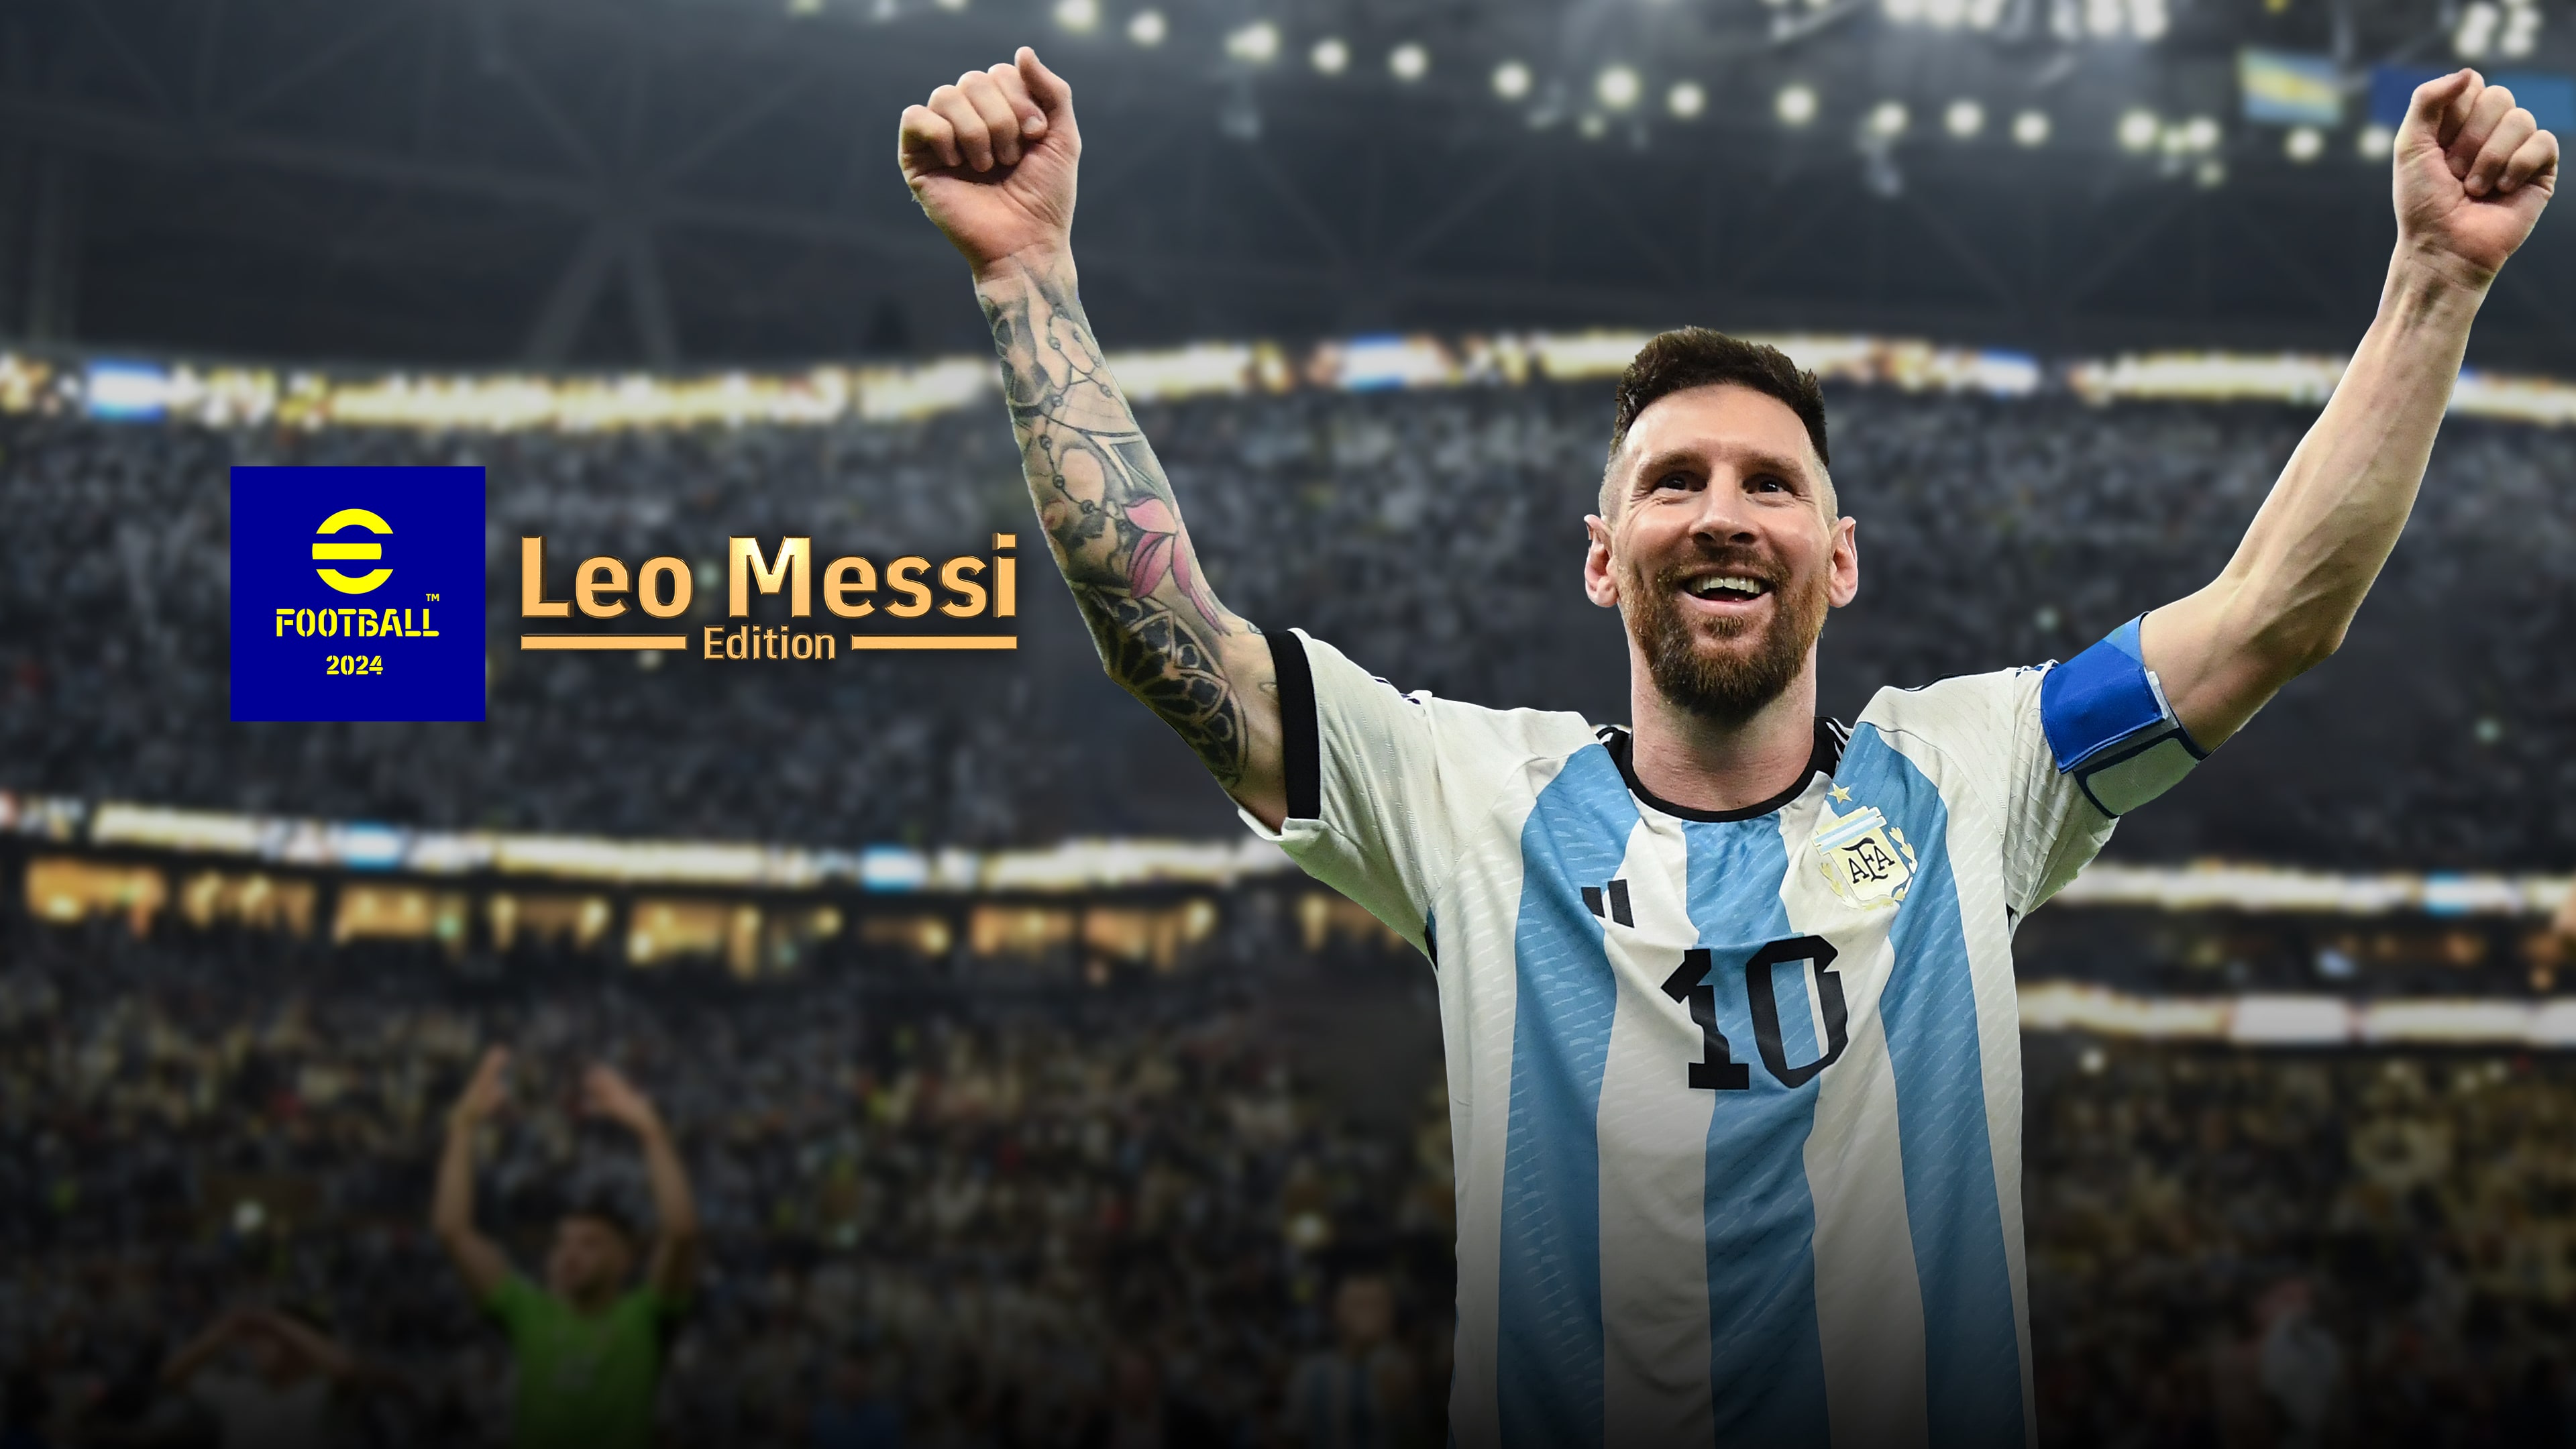 Leo Messi Edition